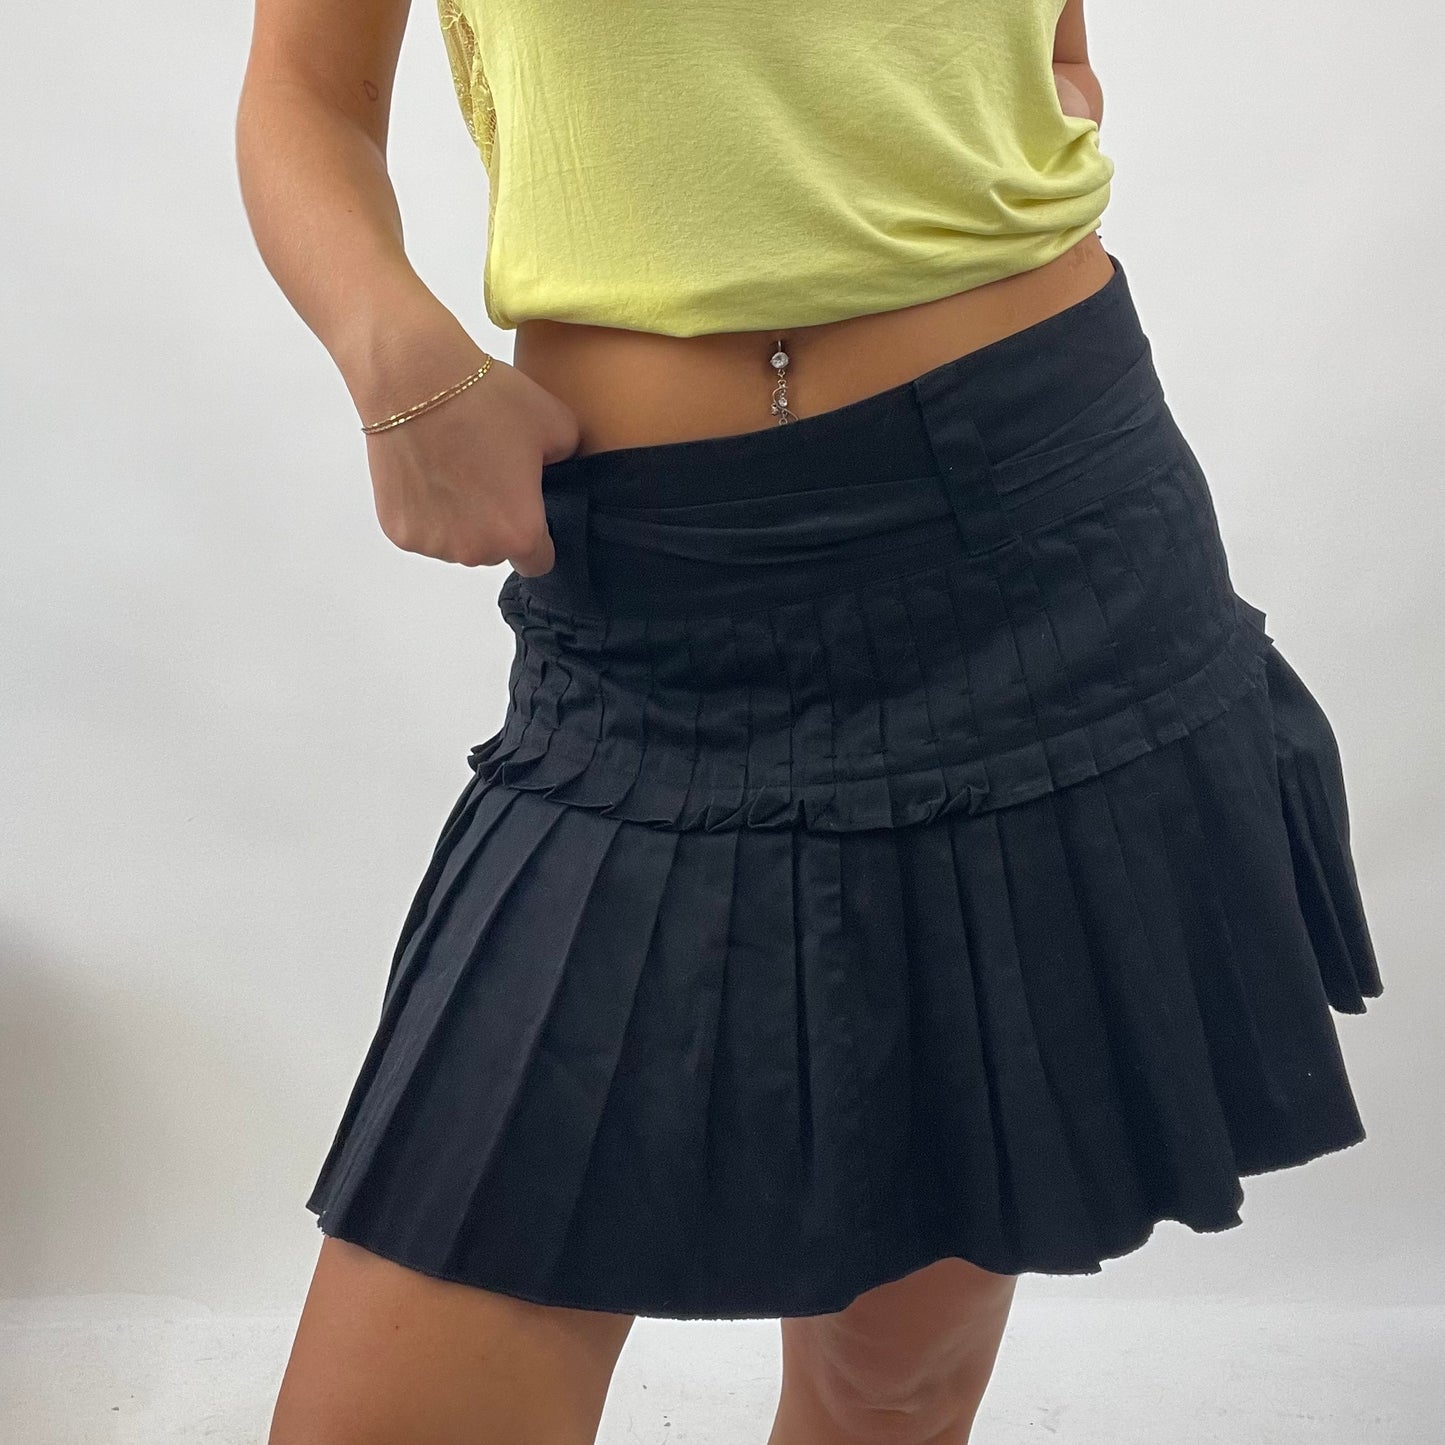 VINTAGE GEMS DROP | small black pleated tie back skirt